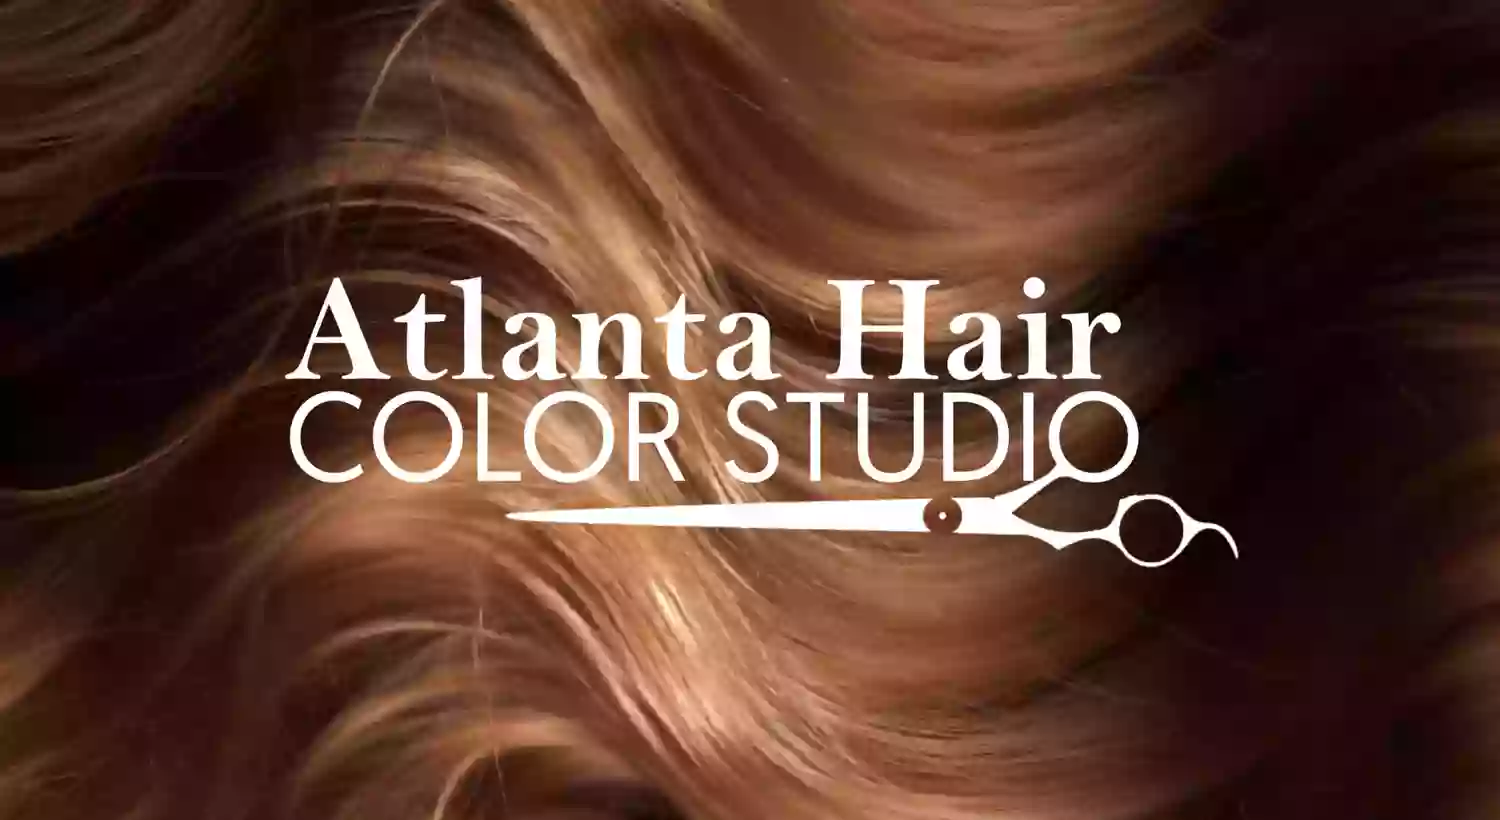 Atlanta Hair Color Studio